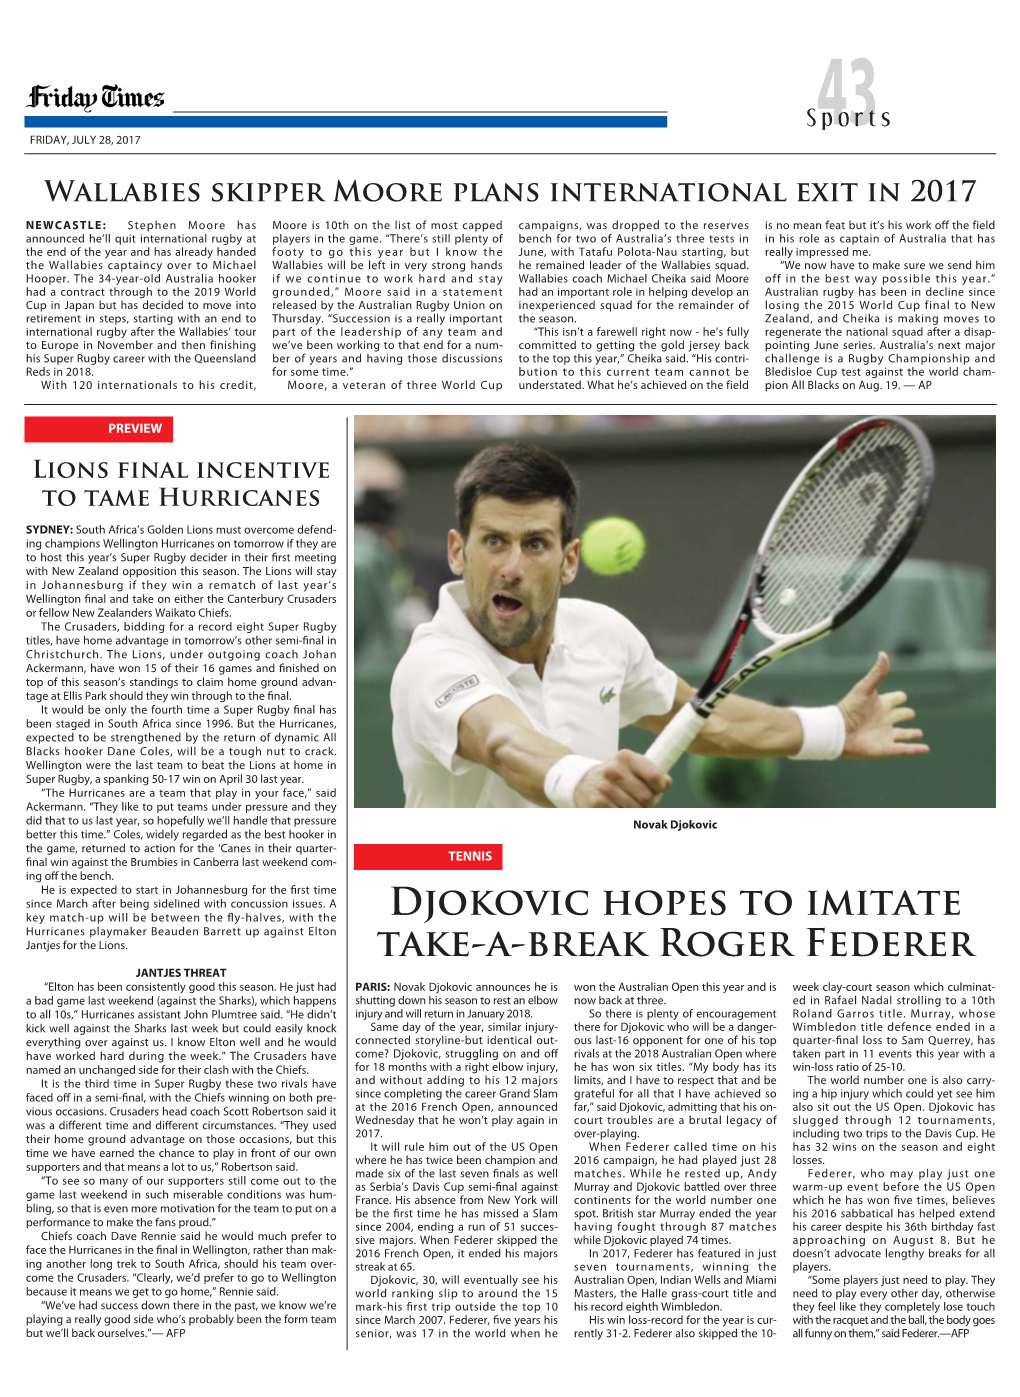 Djokovic Hopes to Imitate Take-A-Break Roger Federer